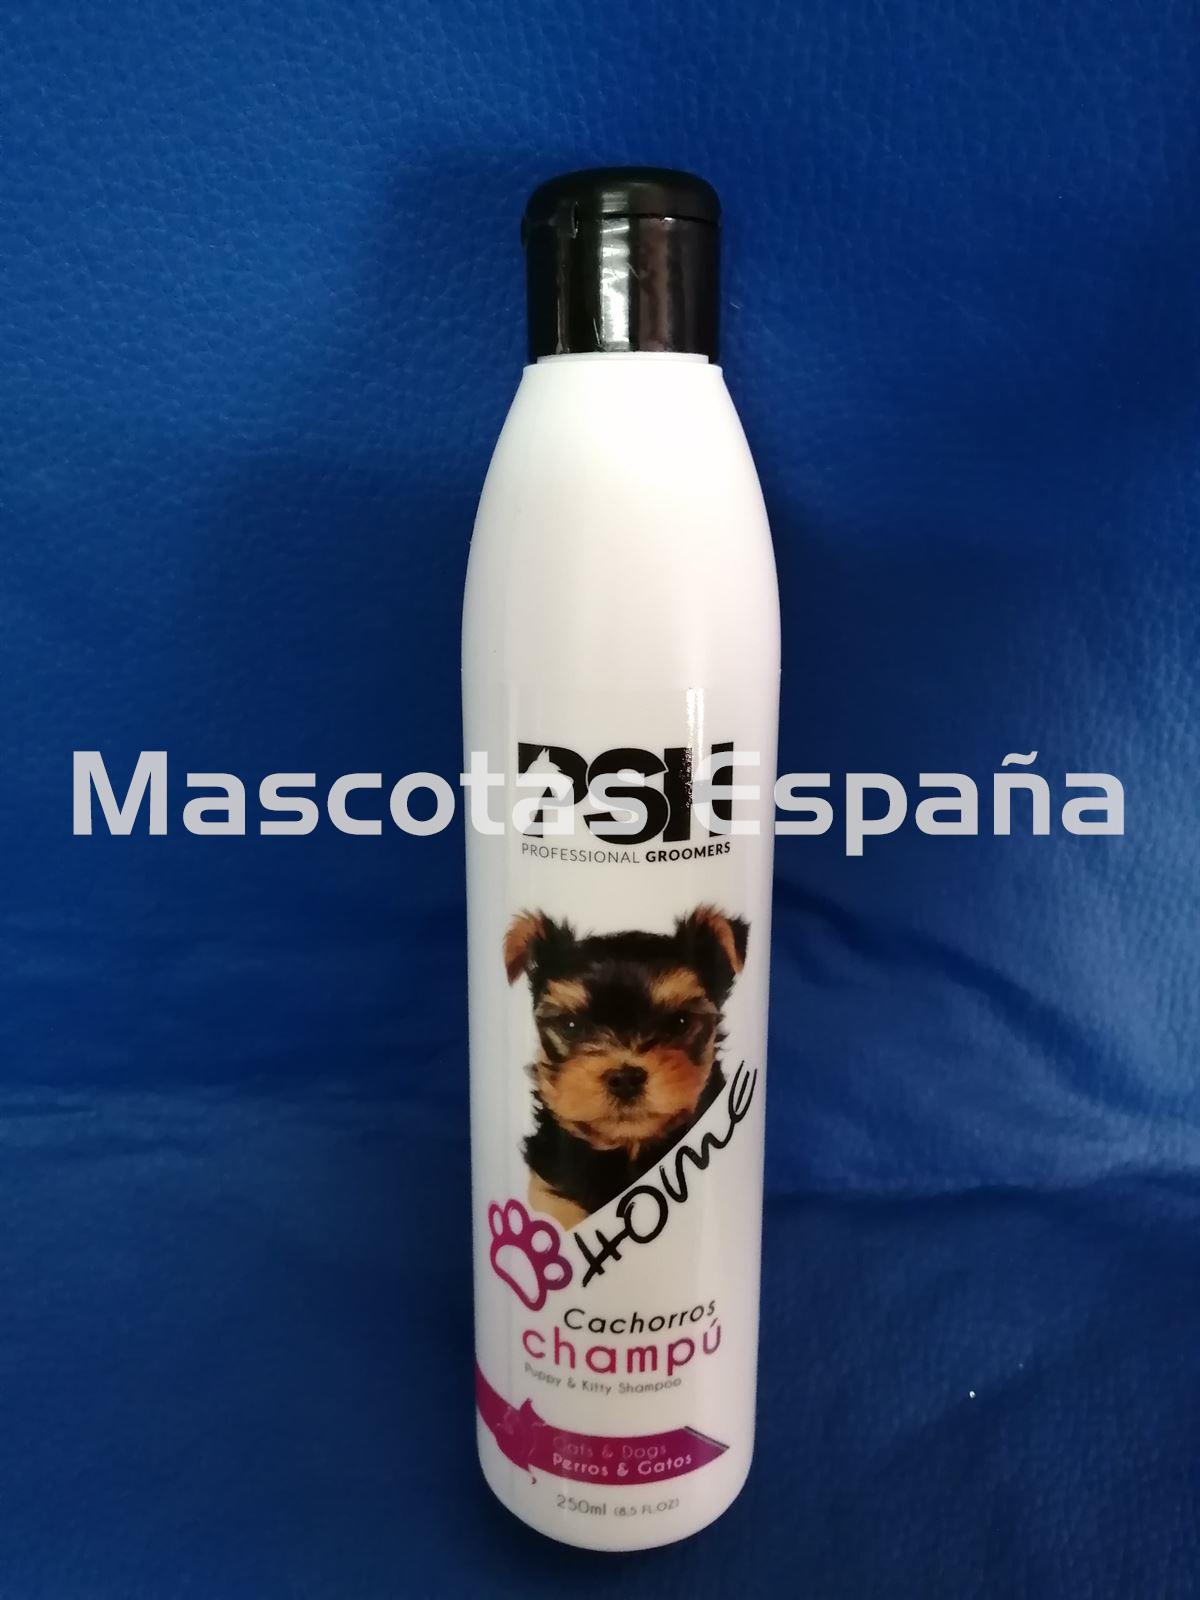 PSH HOME Champú Cachorros (Puppy & Kitty Shampoo) 250ml - Imagen 1